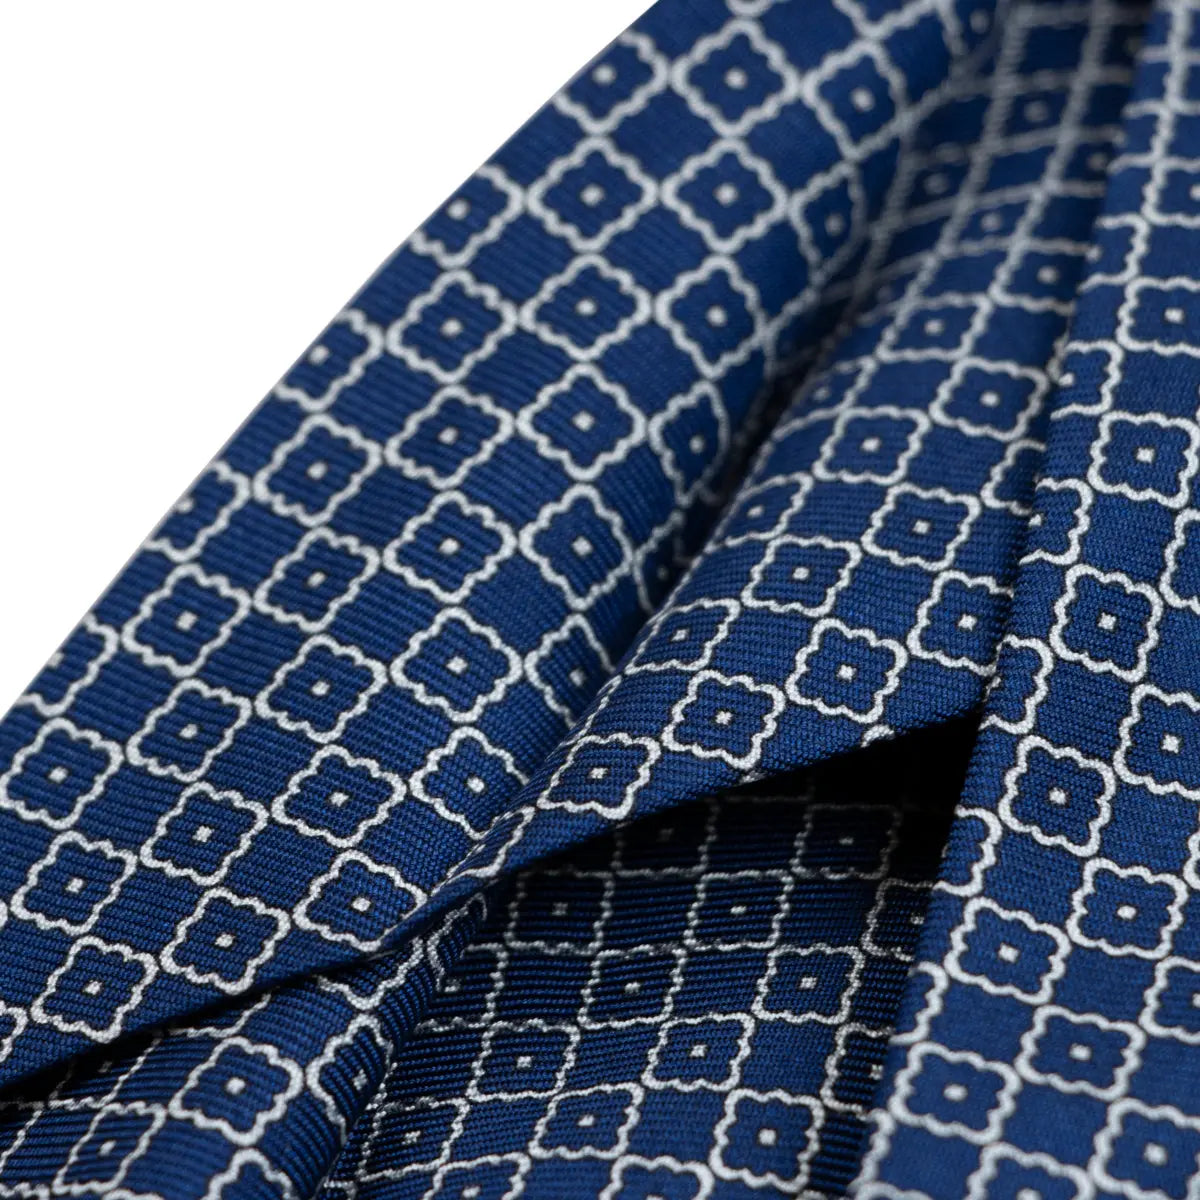 Blue Square Motif 100% Silk Tie  Robert Old   